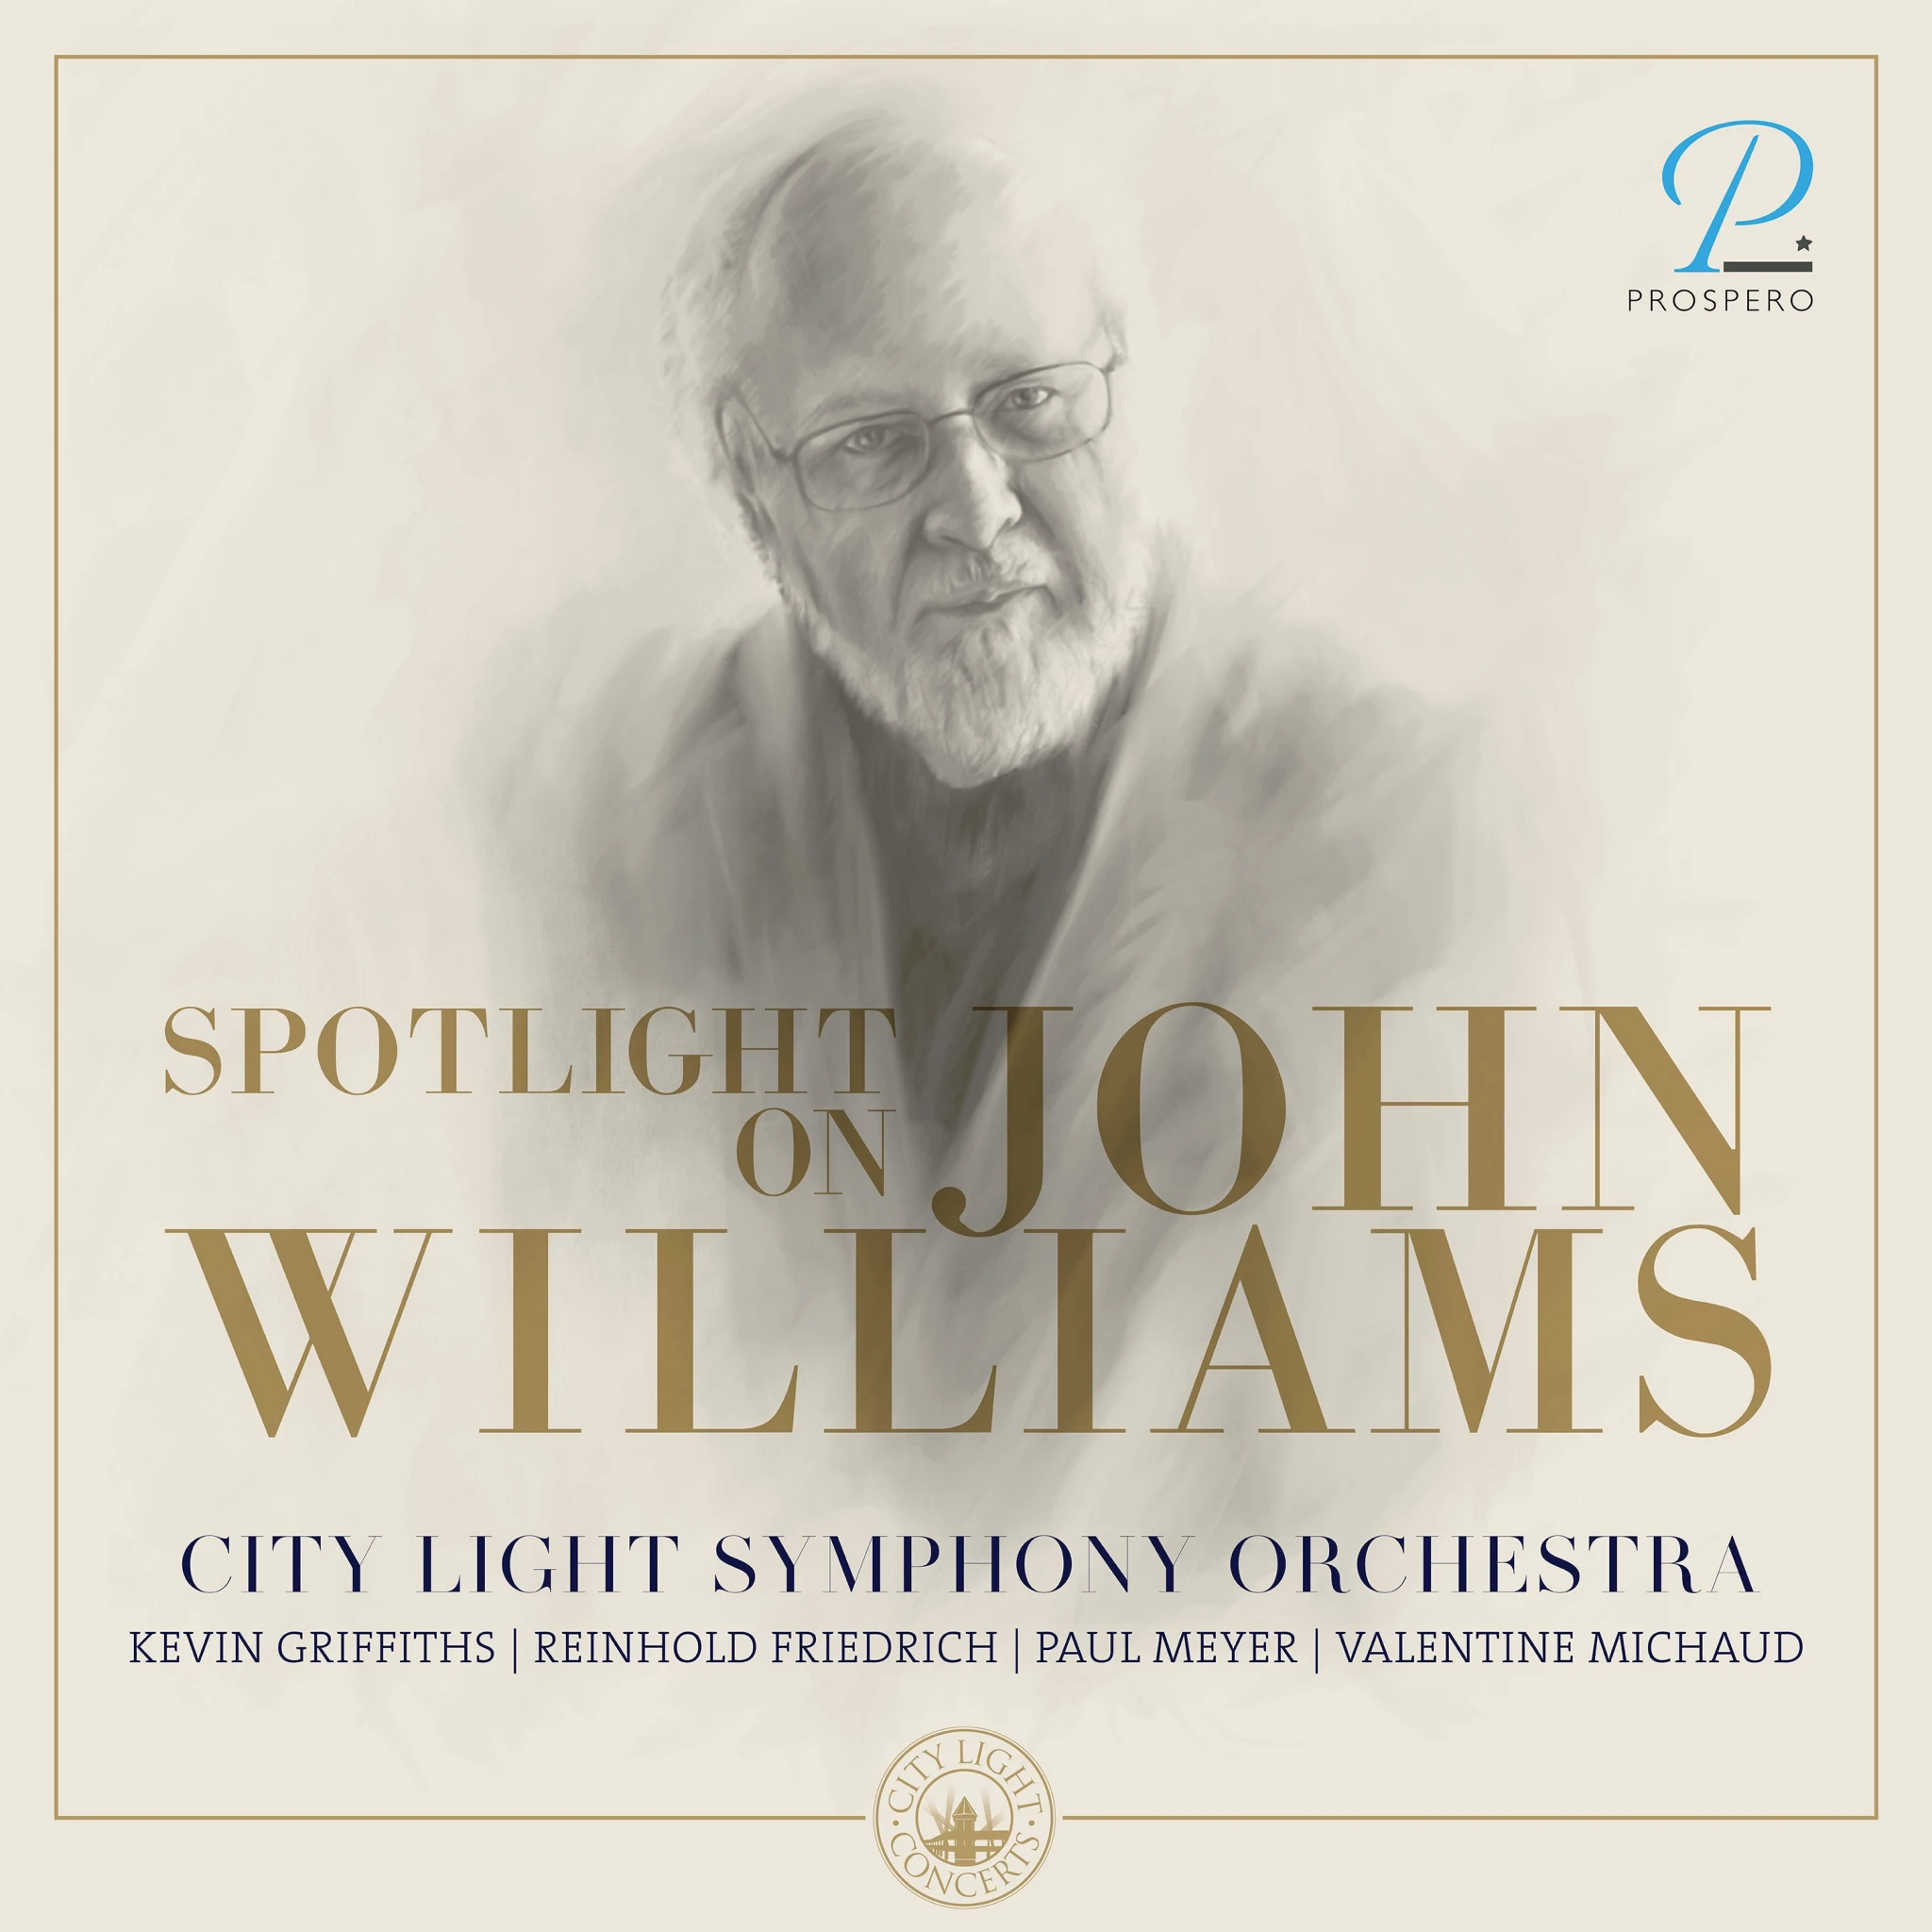 john williams musician biography